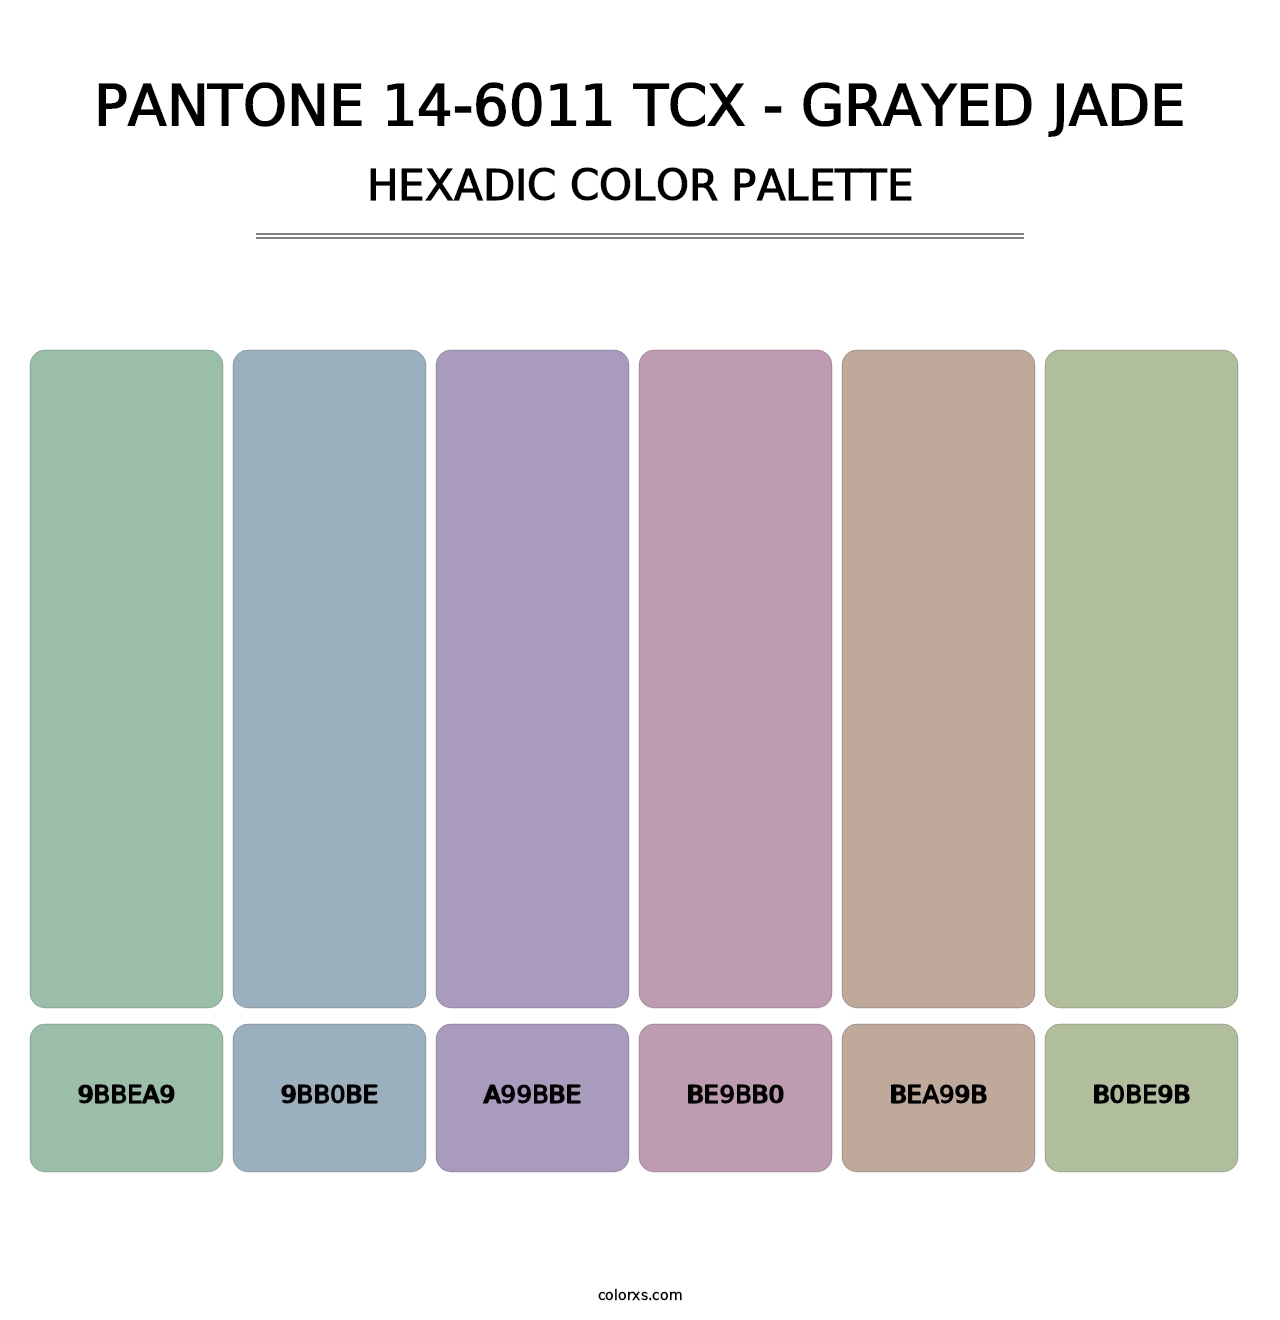 PANTONE 14-6011 TCX - Grayed Jade - Hexadic Color Palette